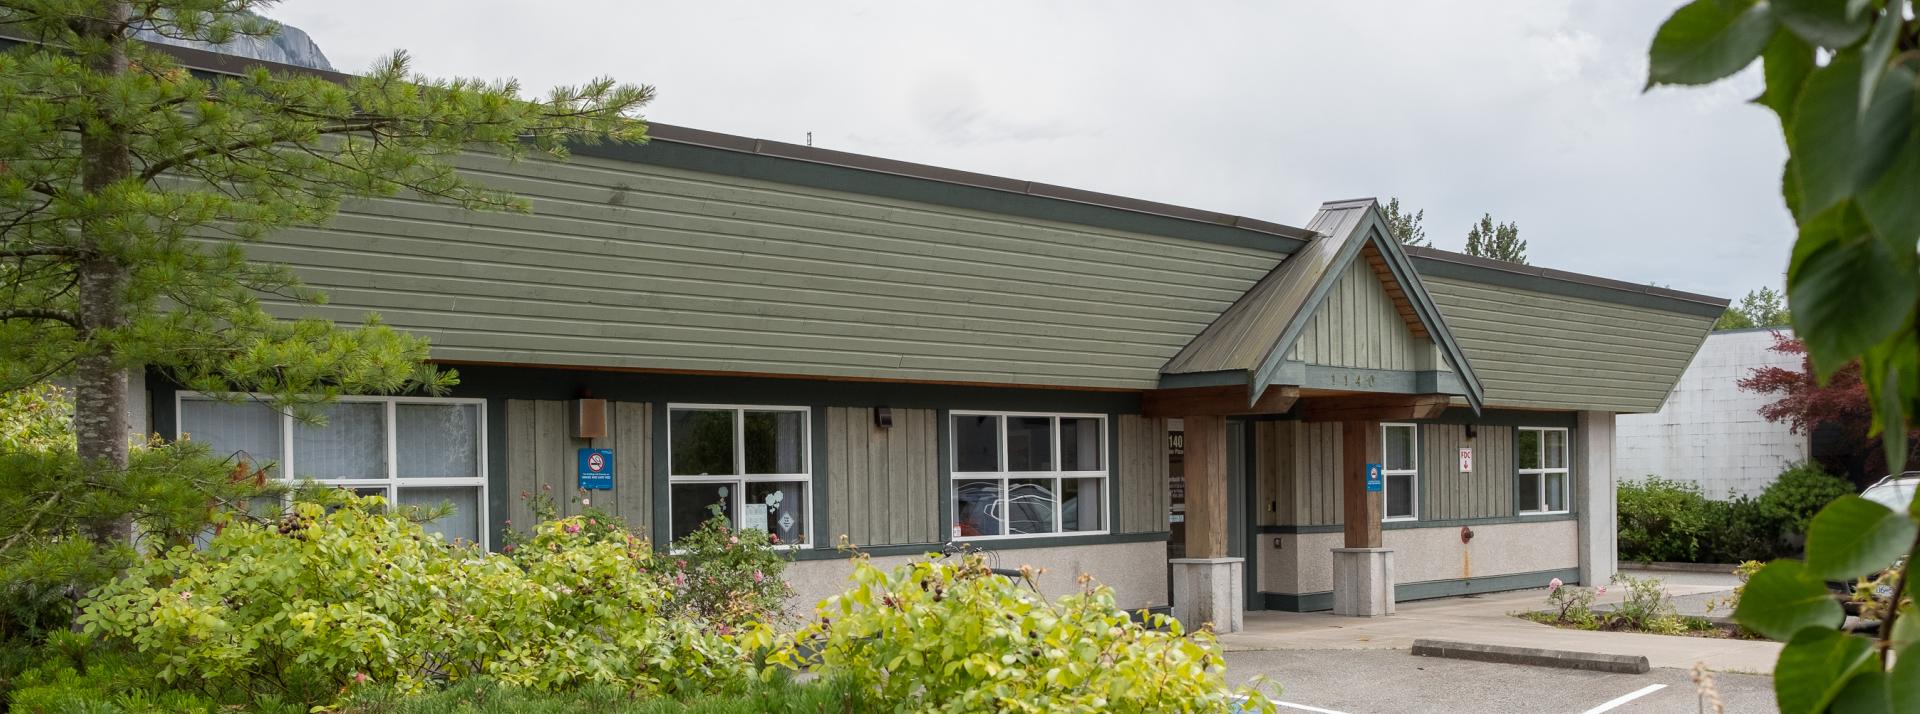 Squamish Community Health Centre Entrance 